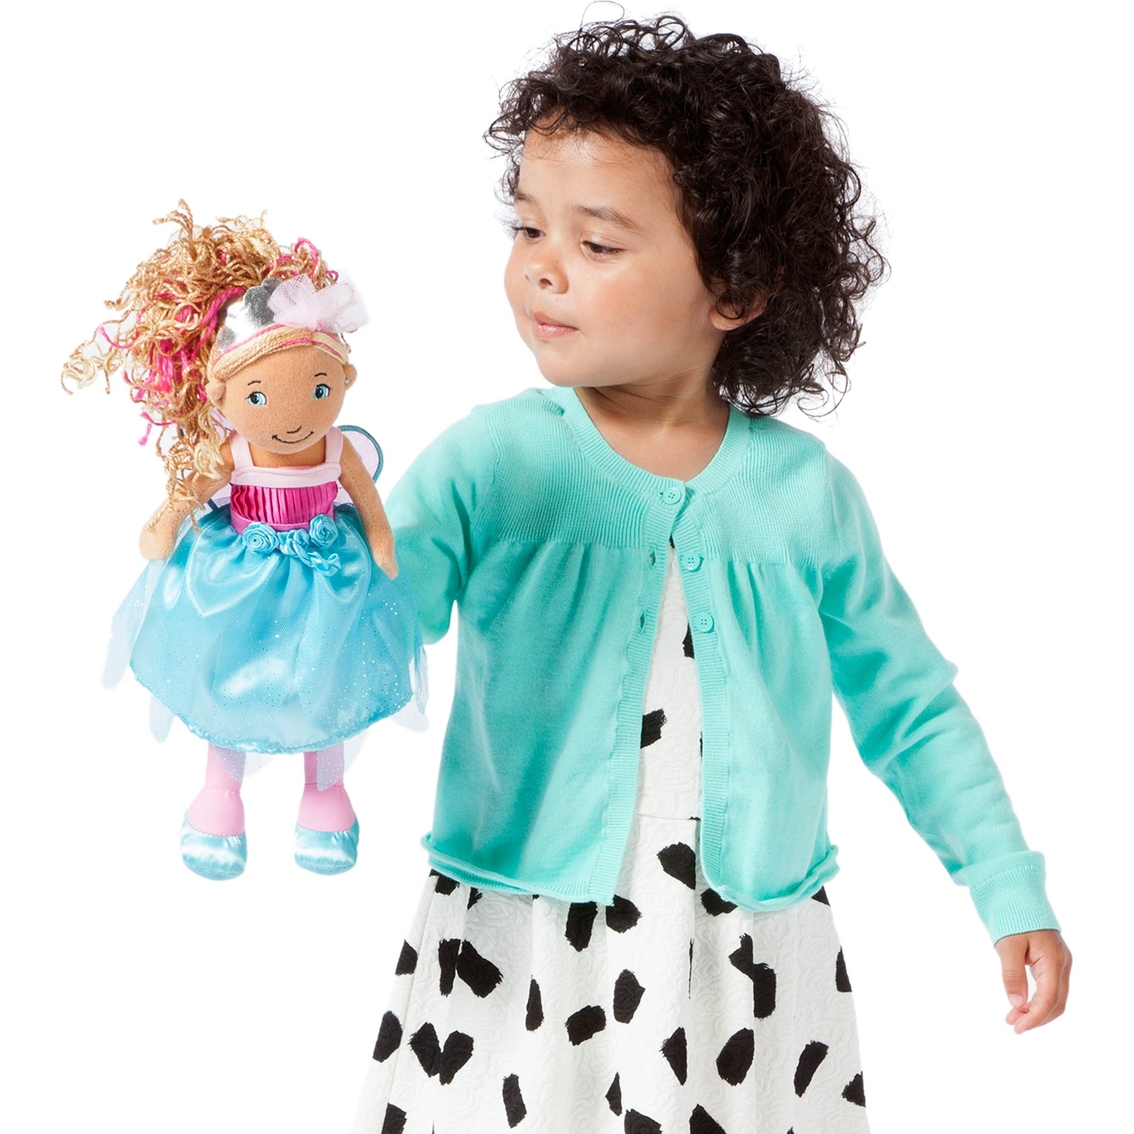 Manhattan Toy Groovy Girls Fairybelles Fashion Doll | Dolls | Baby & Toys Shop The